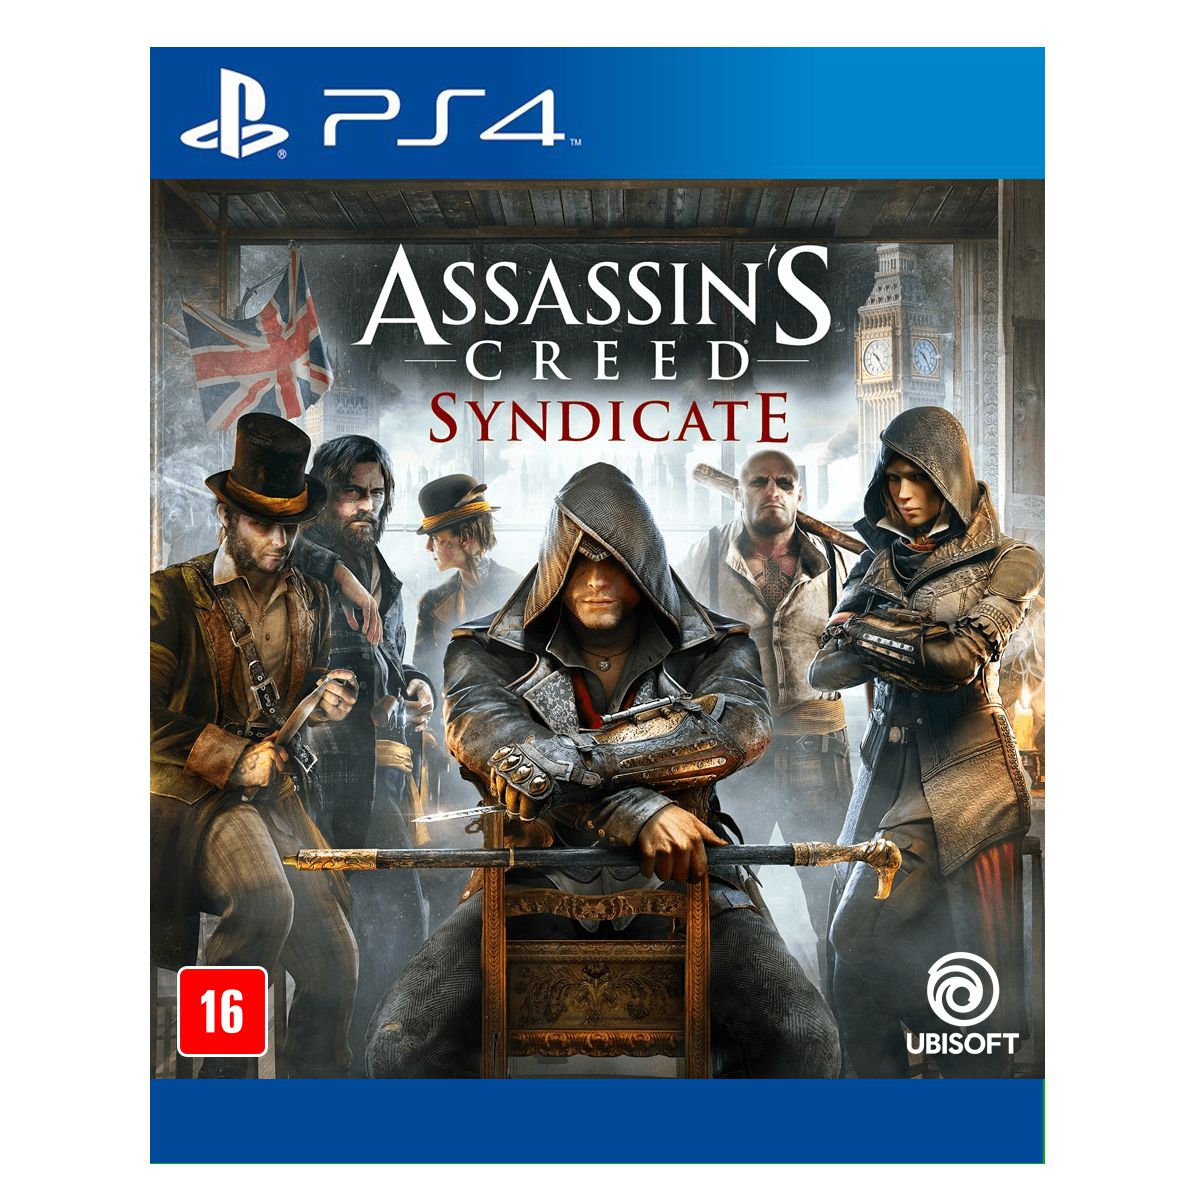 Comprar Jogo Assassins Creed Syndicate Ps4 Psn Mídia Digital Mt10games